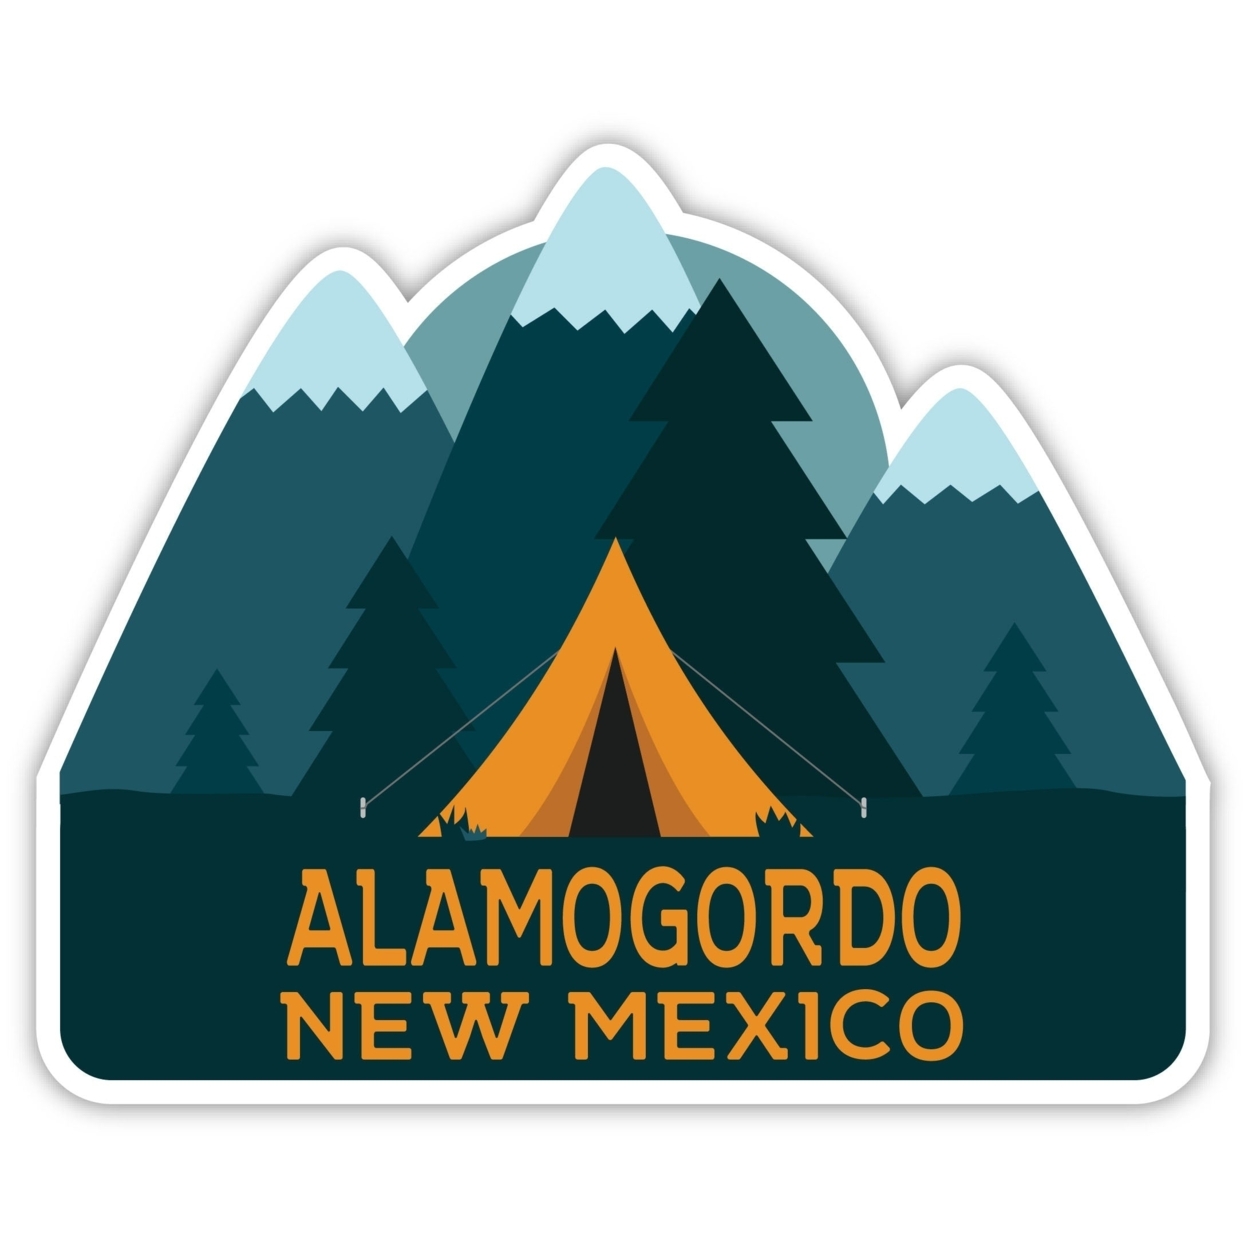 Alamogordo New Mexico Souvenir Decorative Stickers (Choose Theme And Size) - Single Unit, 8-Inch, Tent